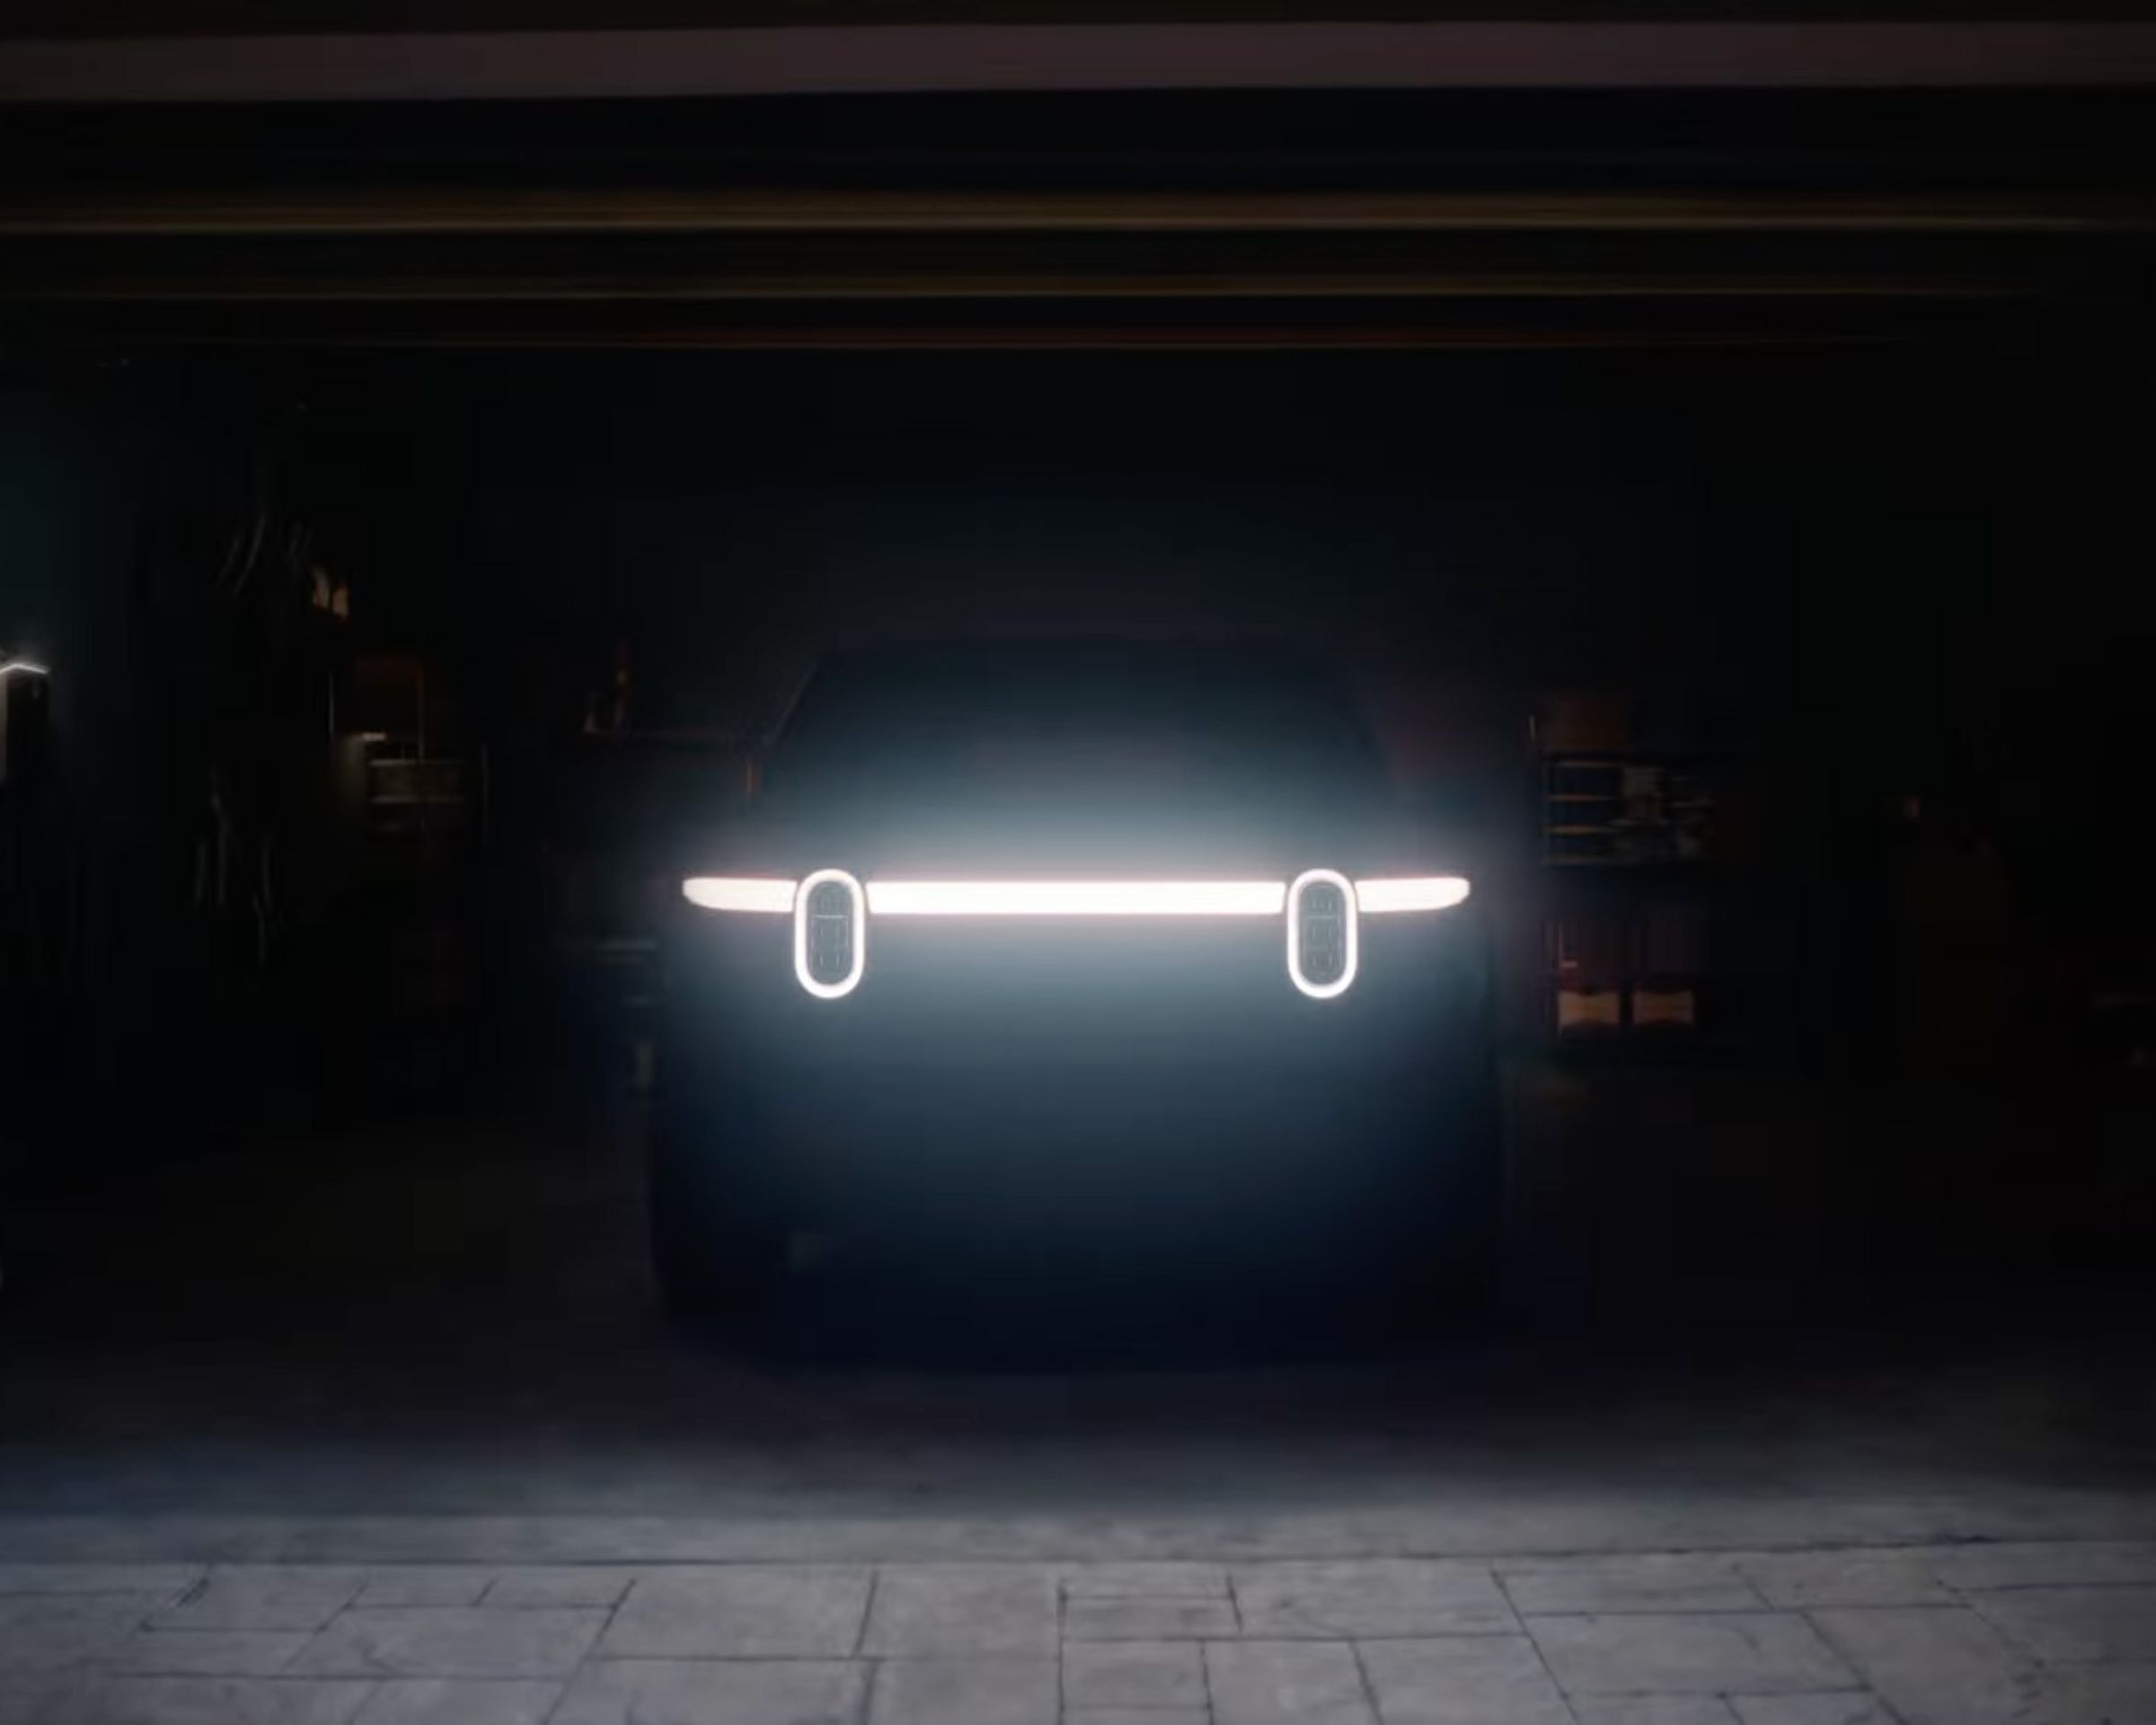 An SUV in a dark garage with headlights illuminated.